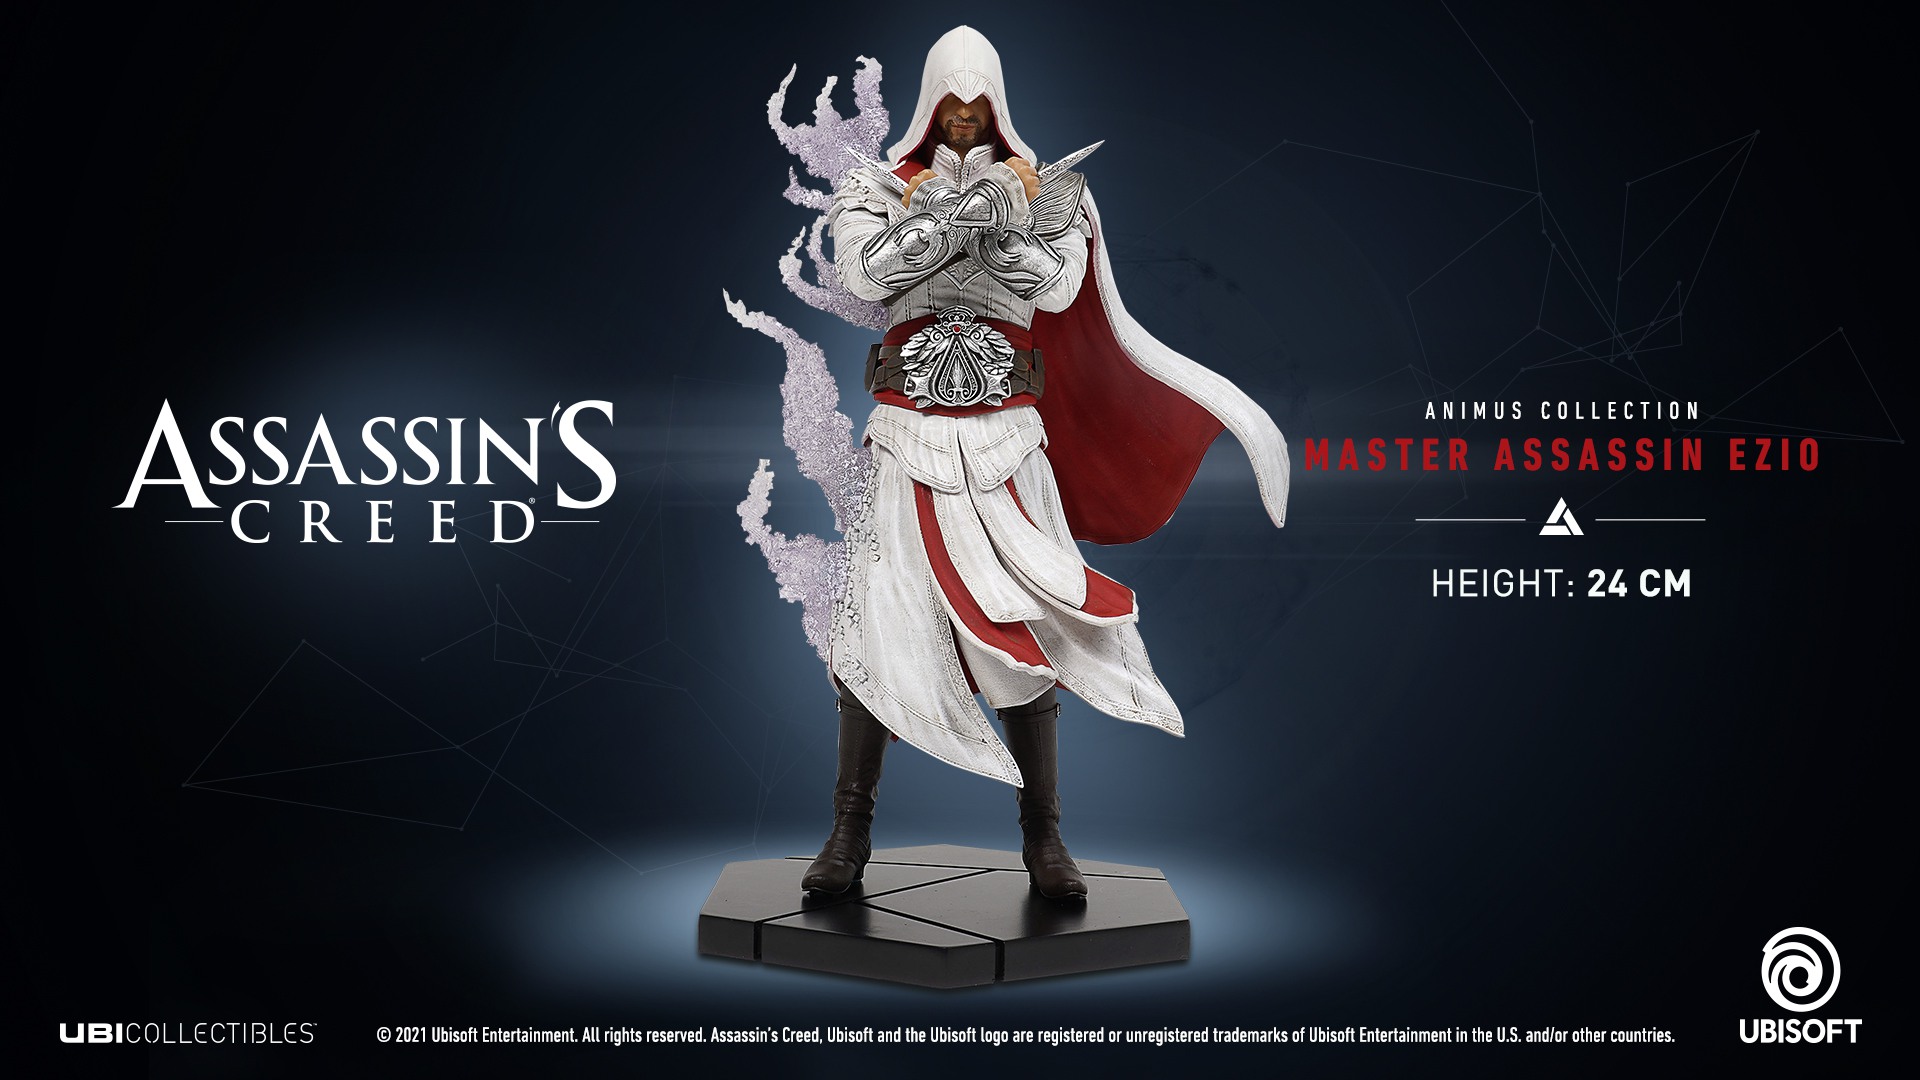 ACV_mockup_AC Animus Collection Master Assassin Ezio_1206_10.10PM_CEST_UK-4951160c3704c7e66f0.88963916